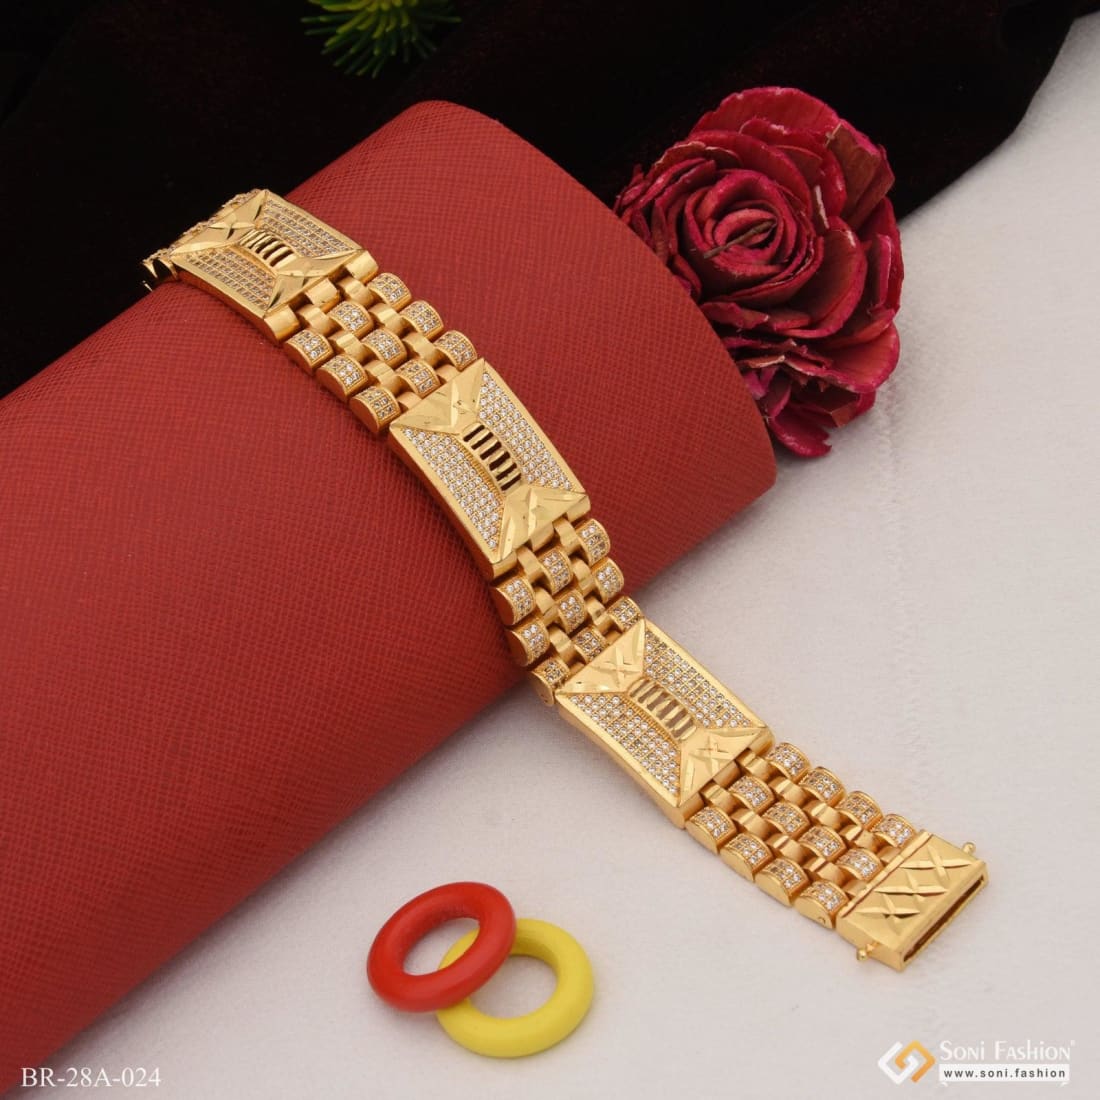 Gold bracelets with weight, Men's bracelet designs - YouTube